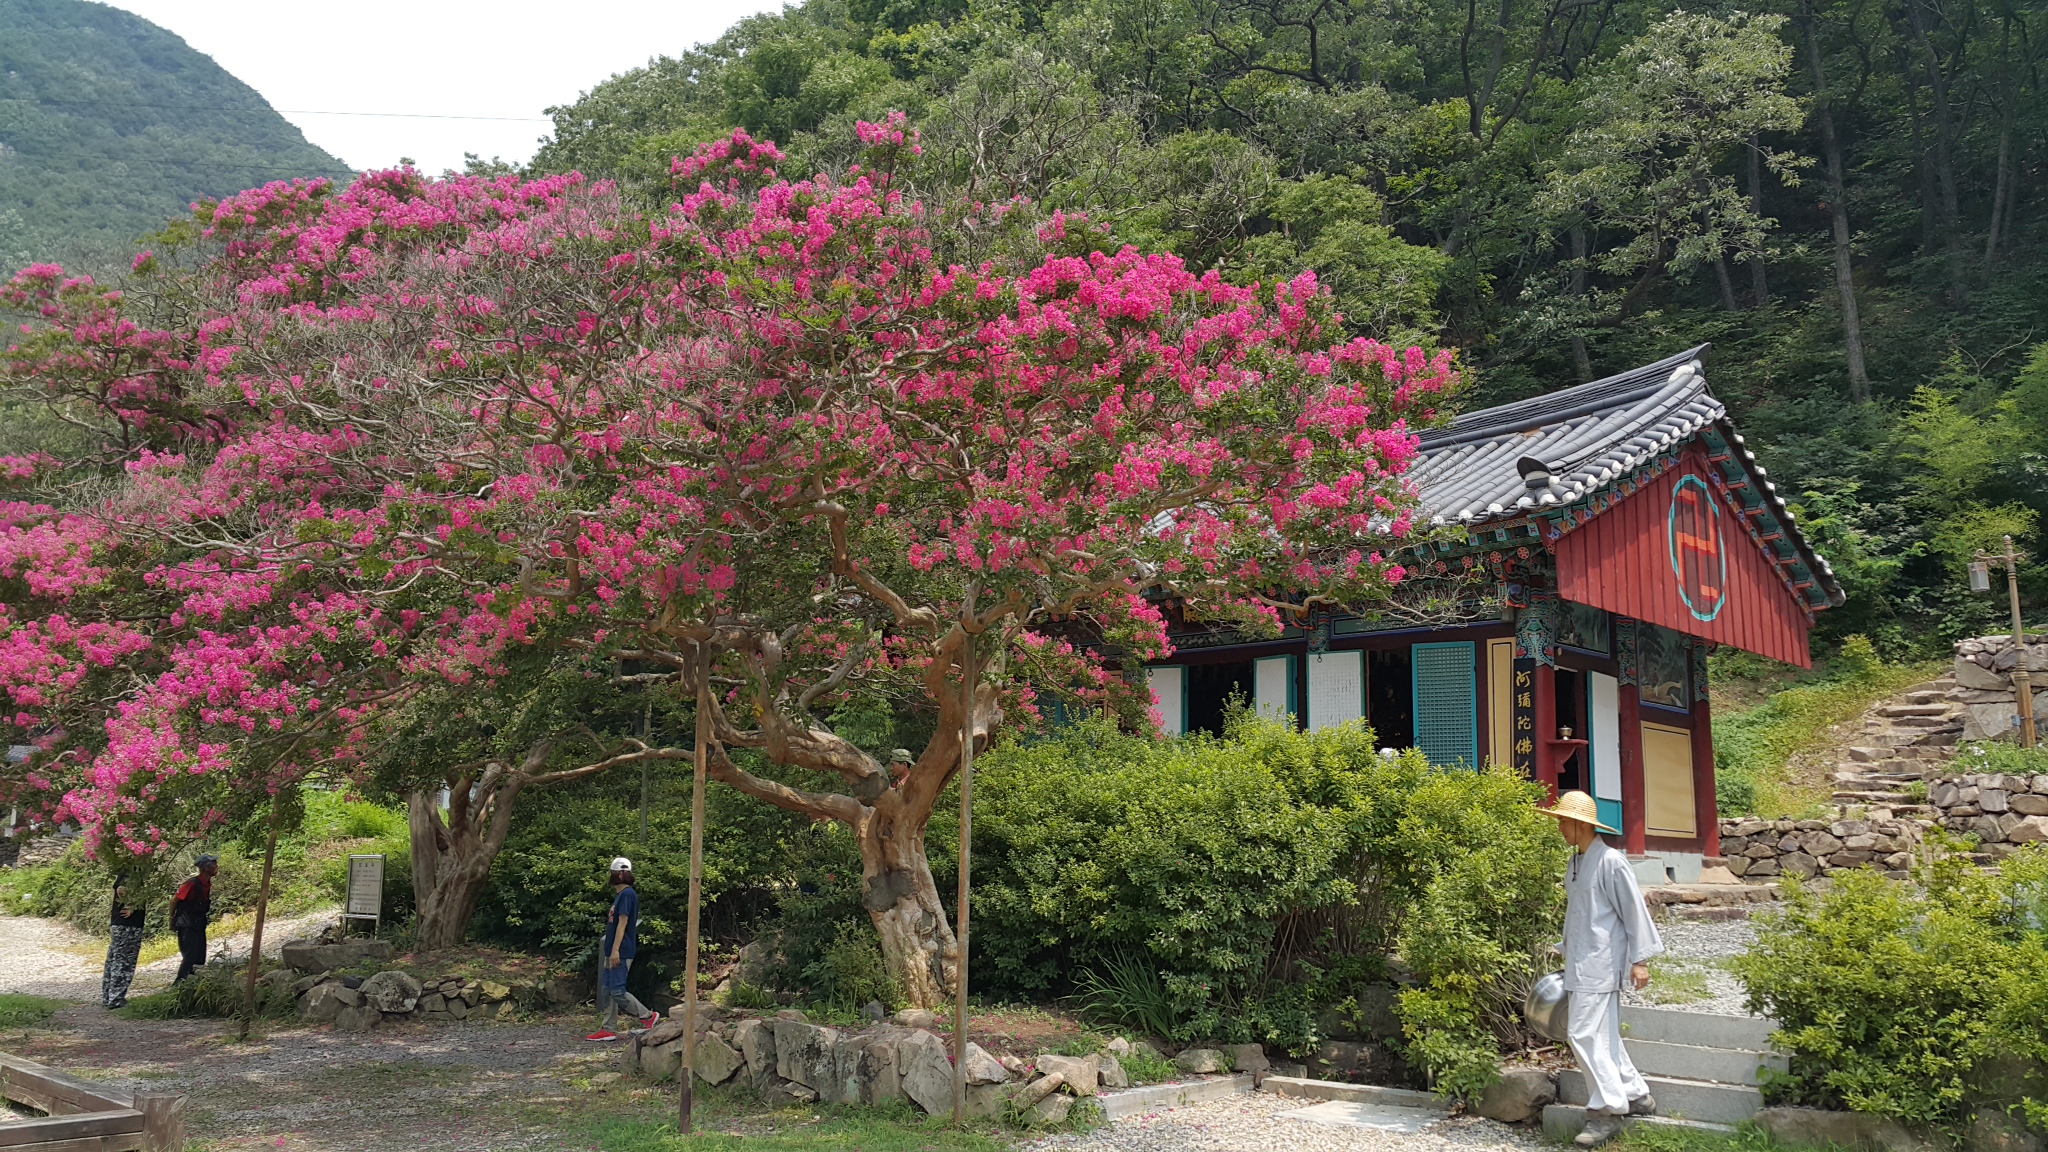 20150802_115158.jpg : 500년된 배롱나무